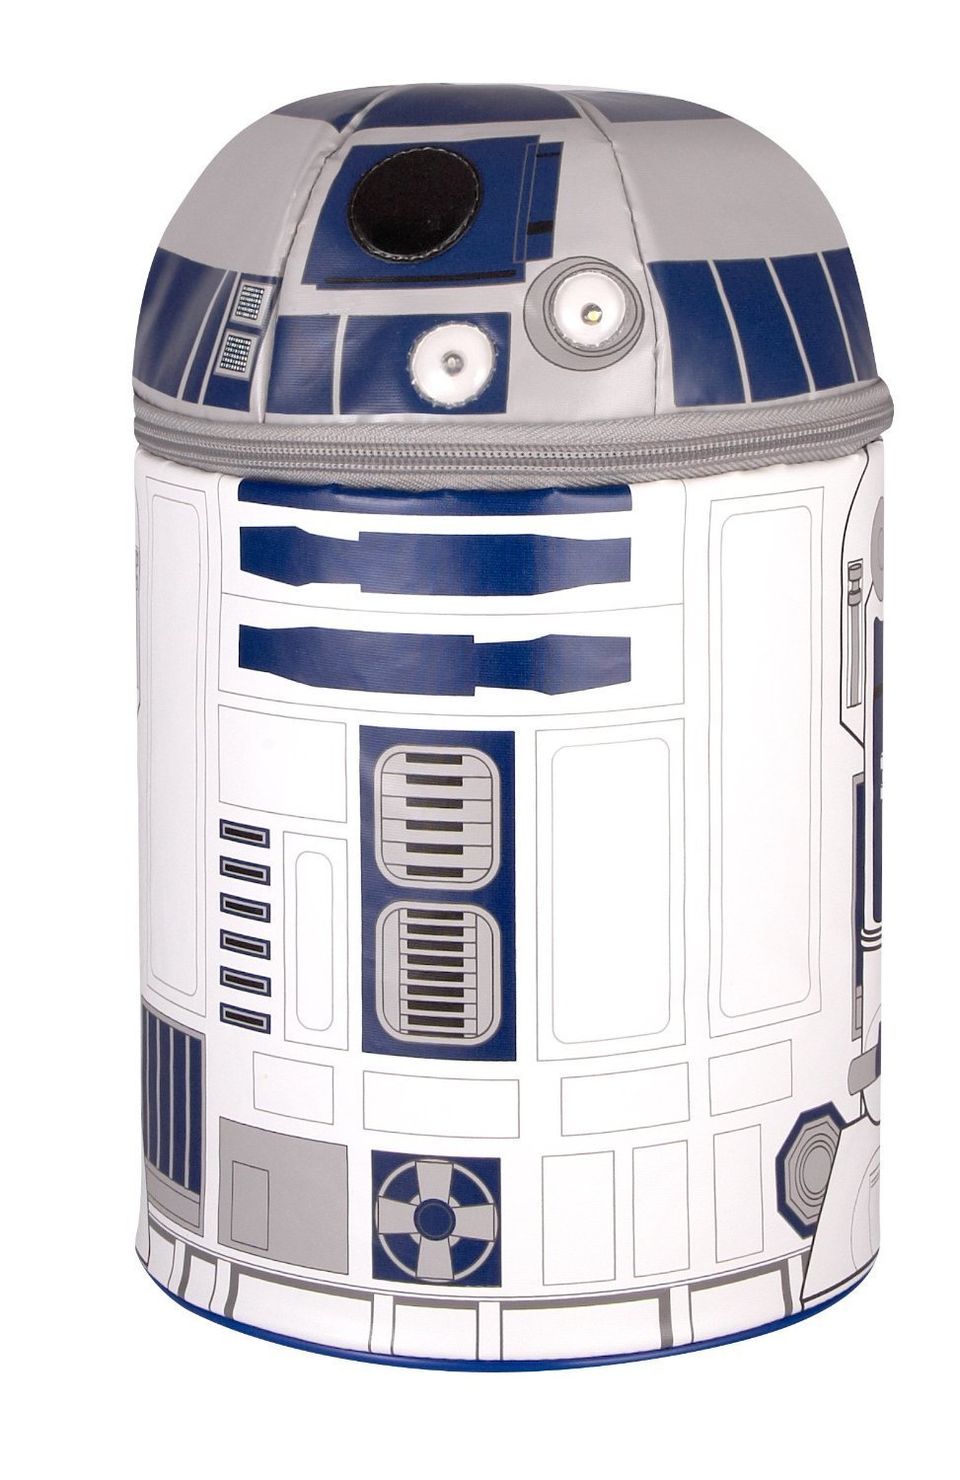 ThinkGeek Star Wars R2-D2 Measuring Cup Set Body Built from 4 Measuring Cups